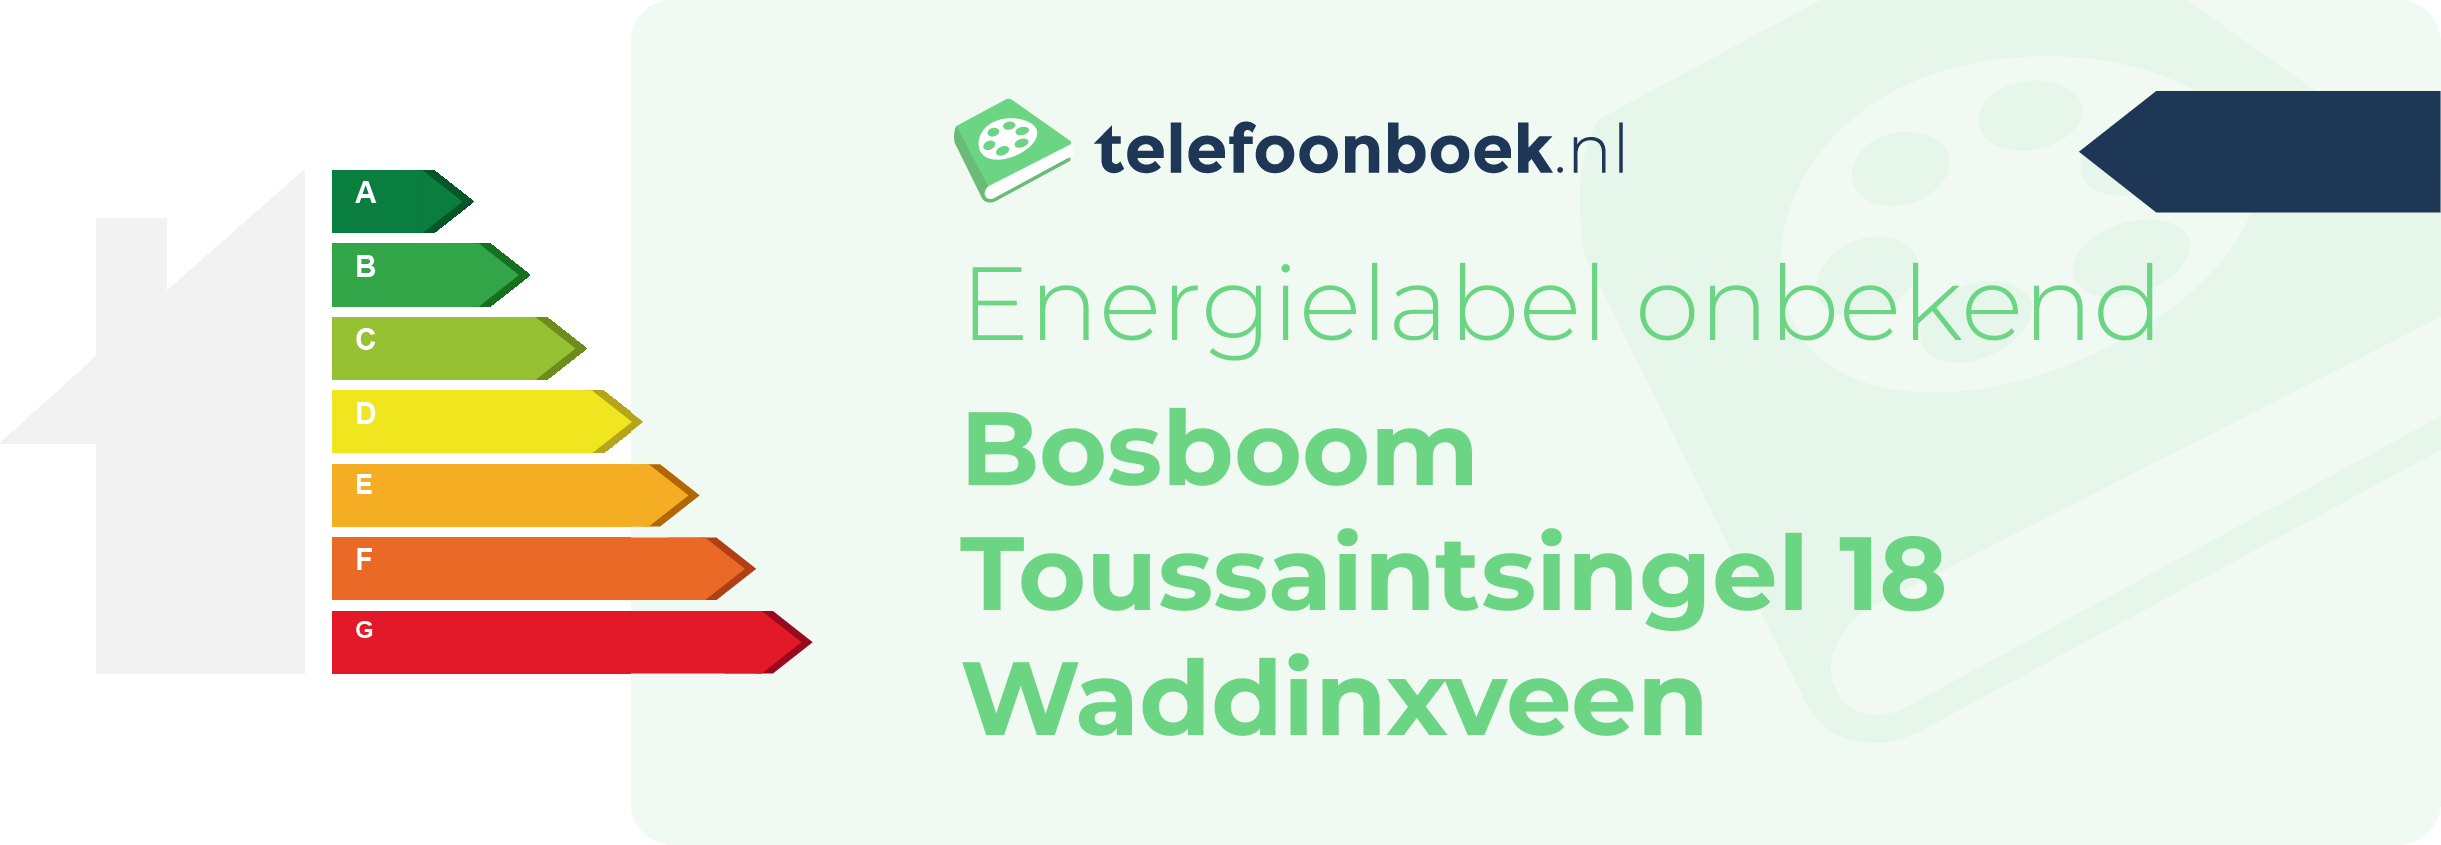 Energielabel Bosboom Toussaintsingel 18 Waddinxveen